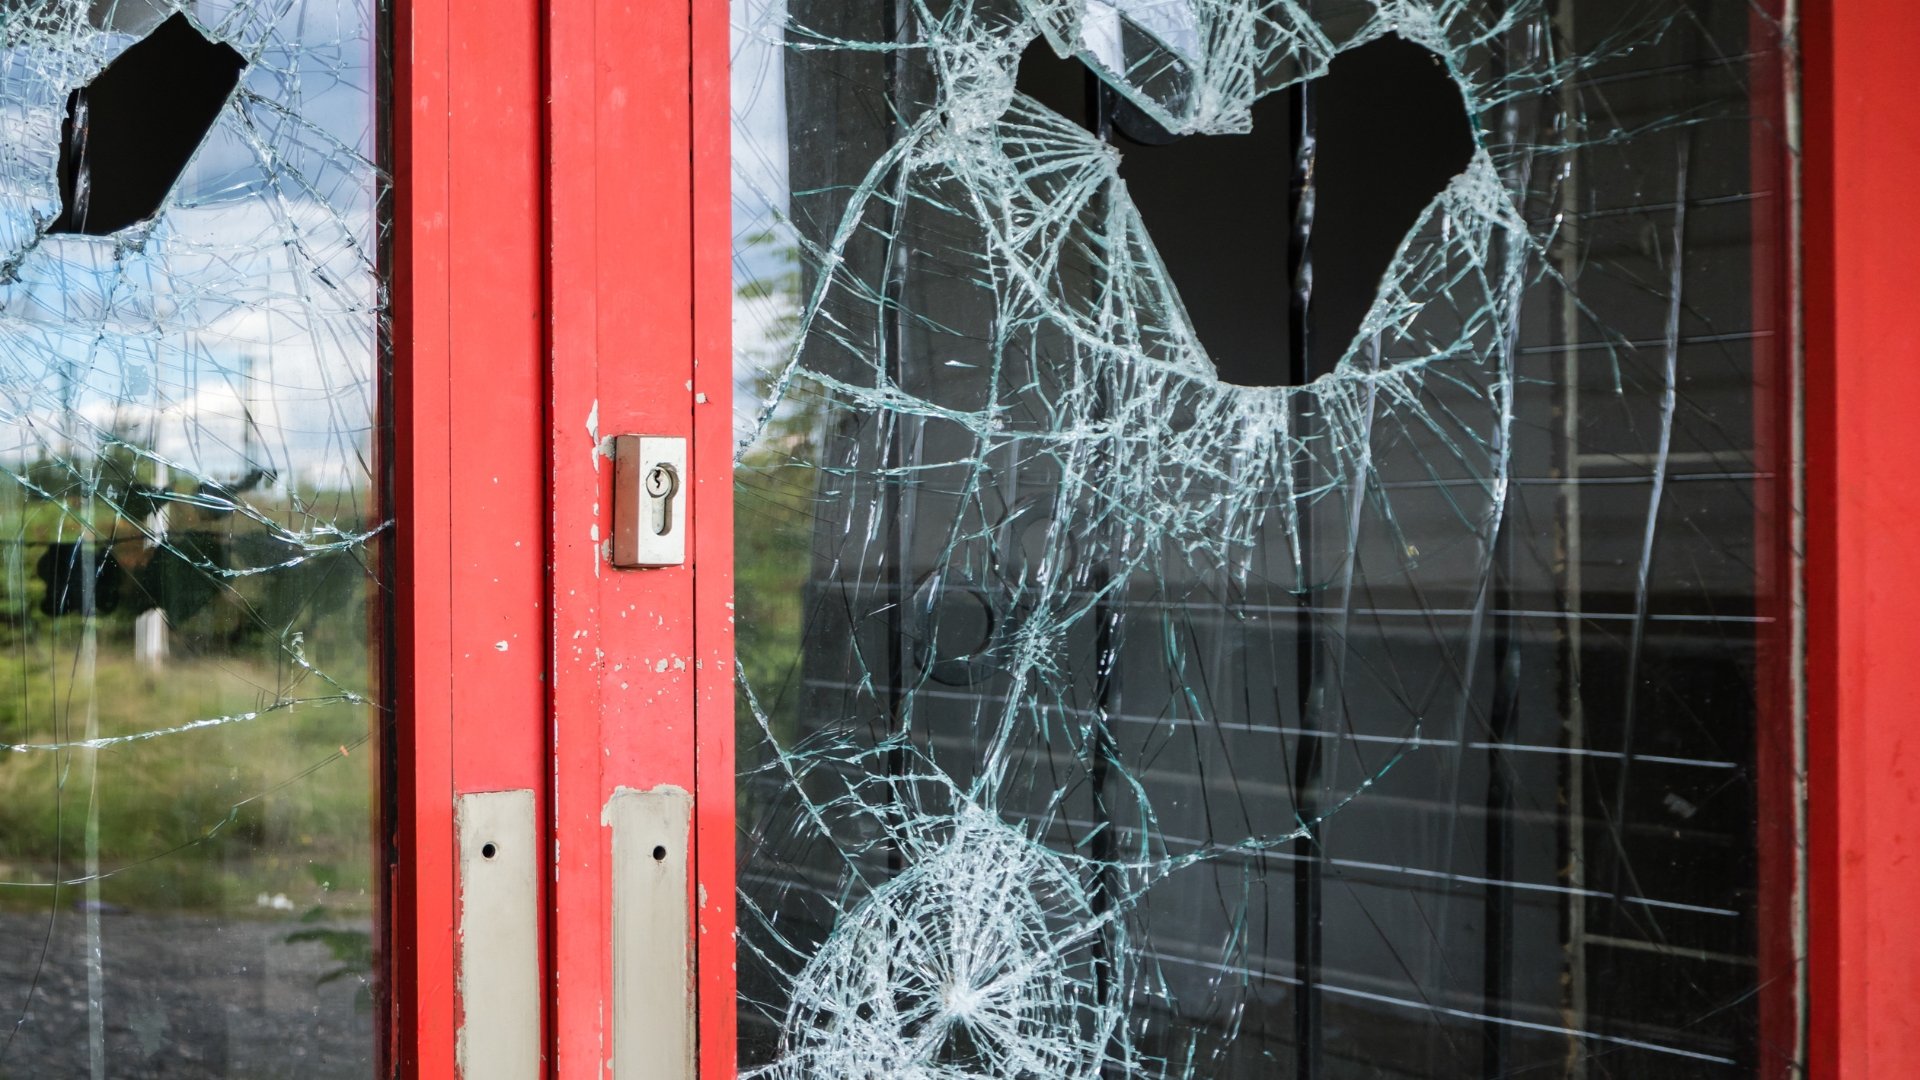 A damaged commercial door with broken glasses